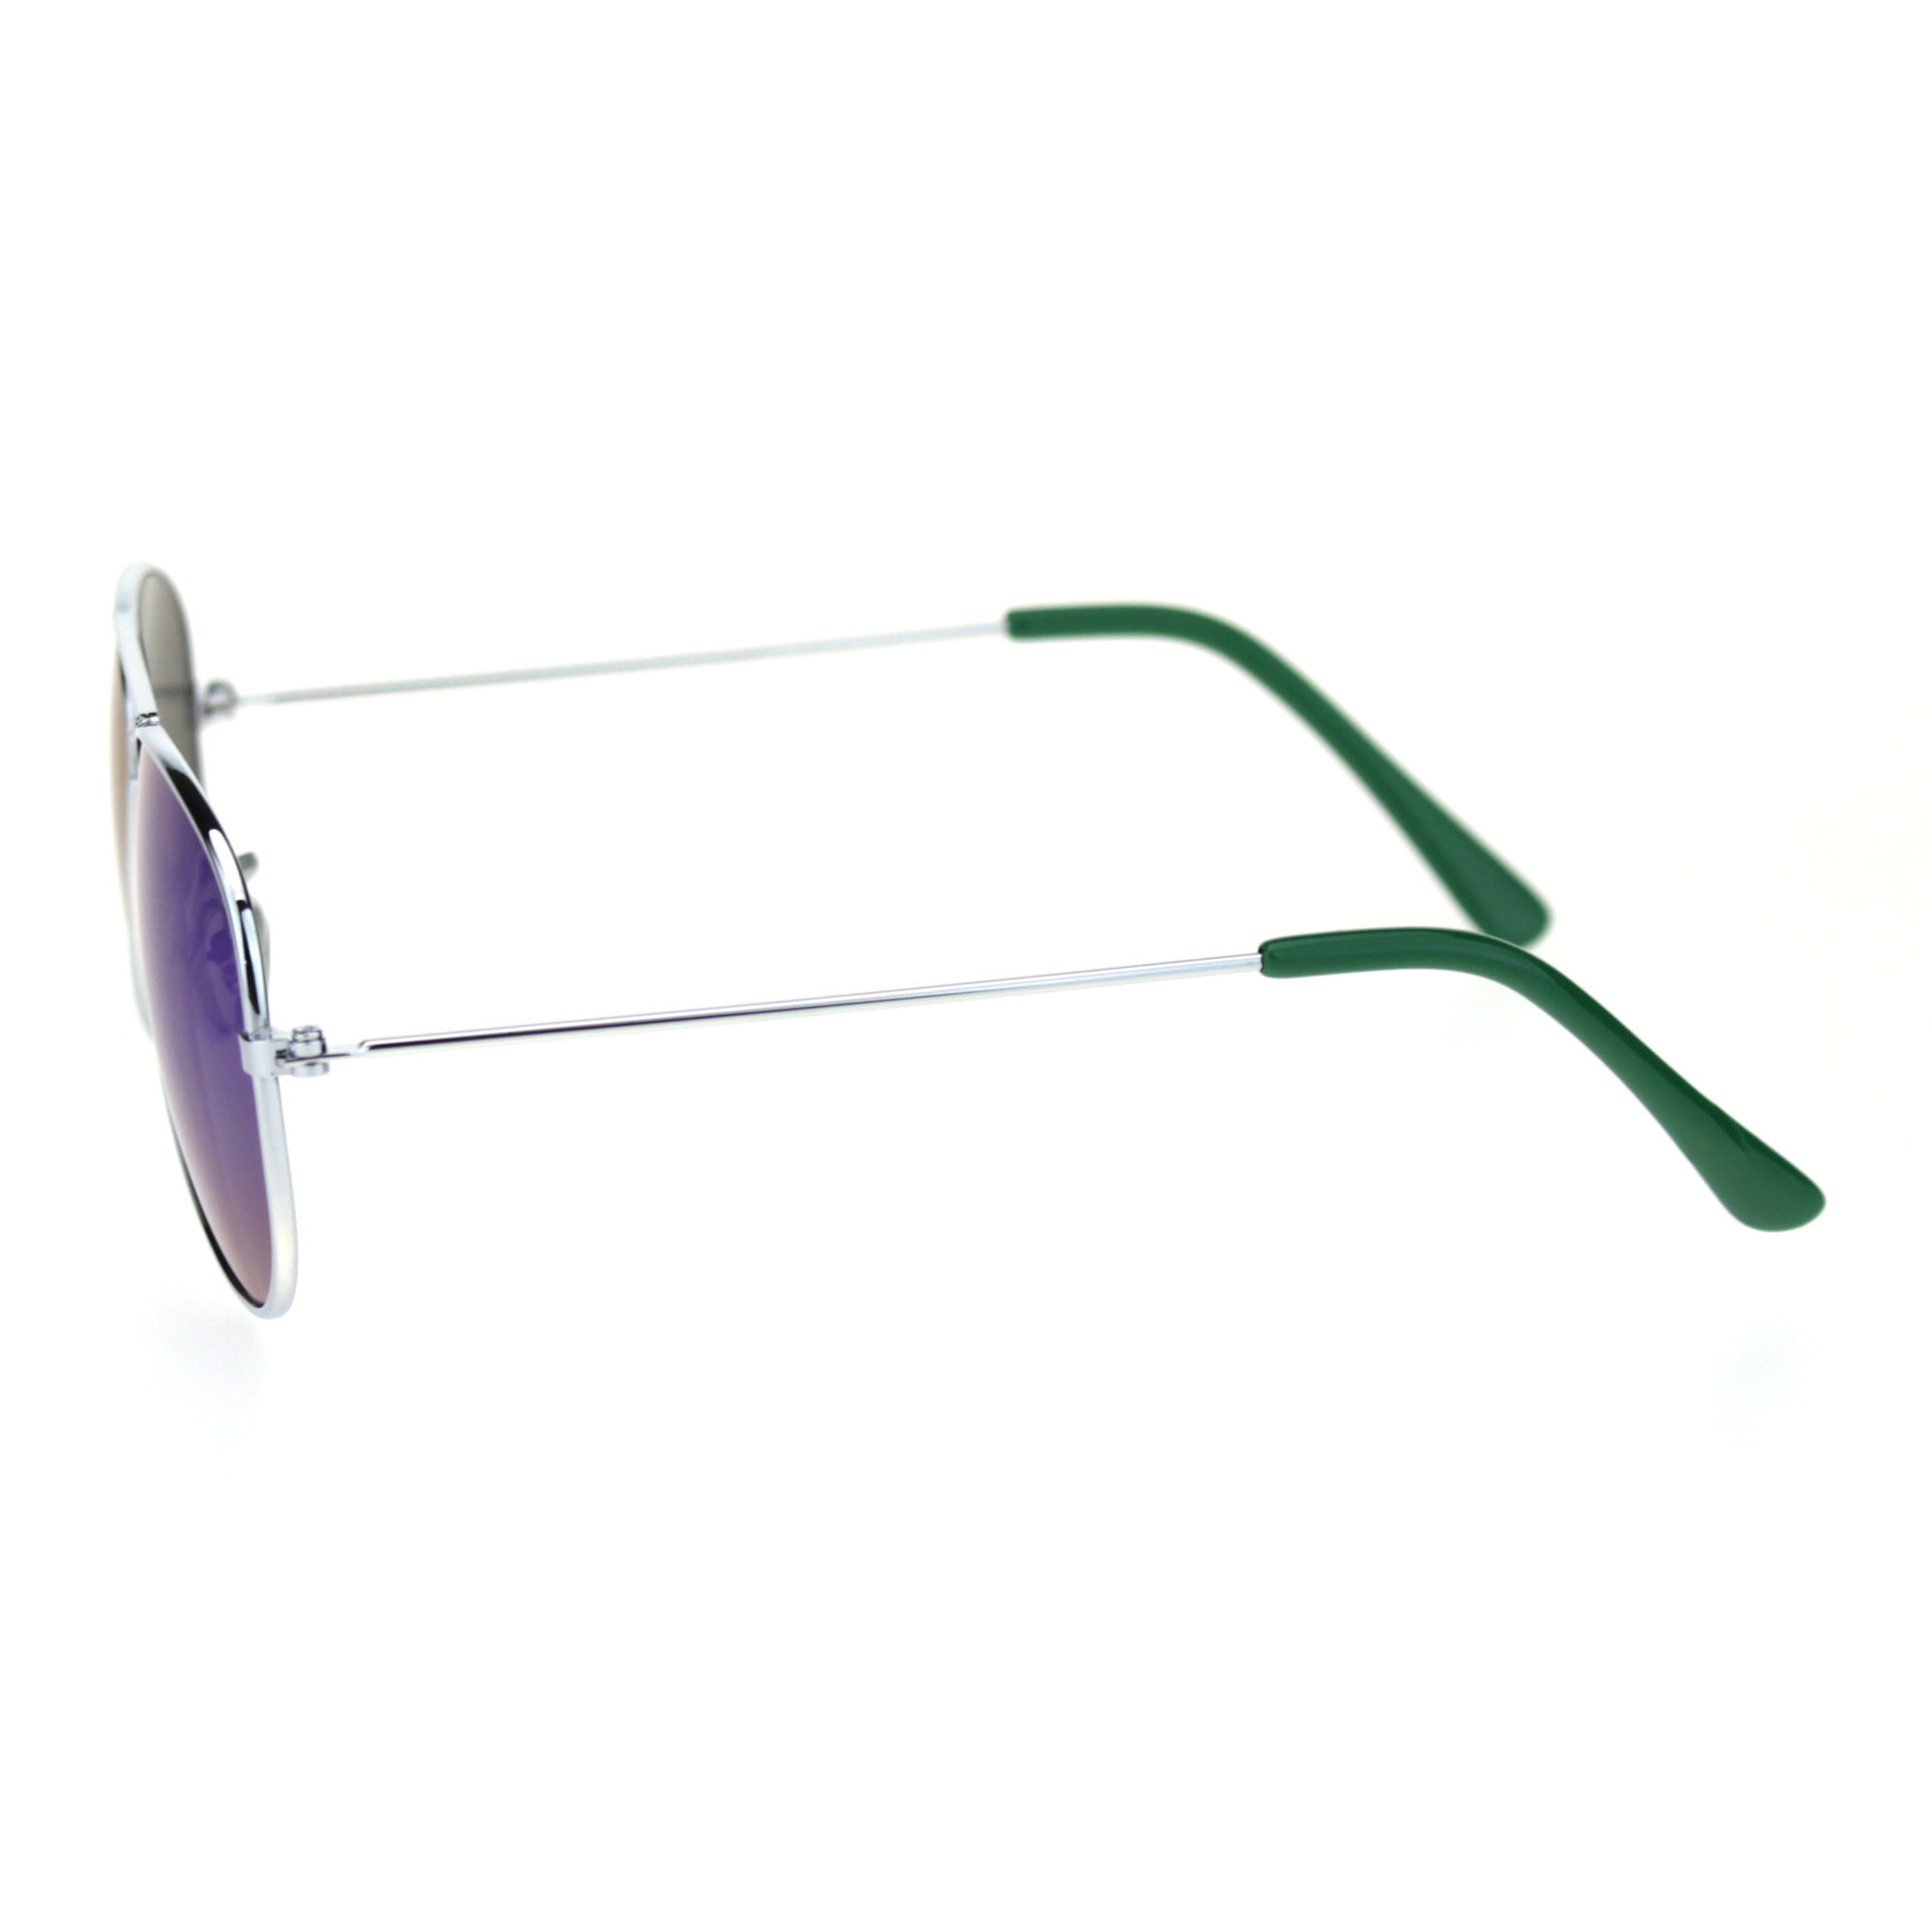 Child Size Reflective Color Mirror Silver Frame Cop Style Pilots Sunglasses 